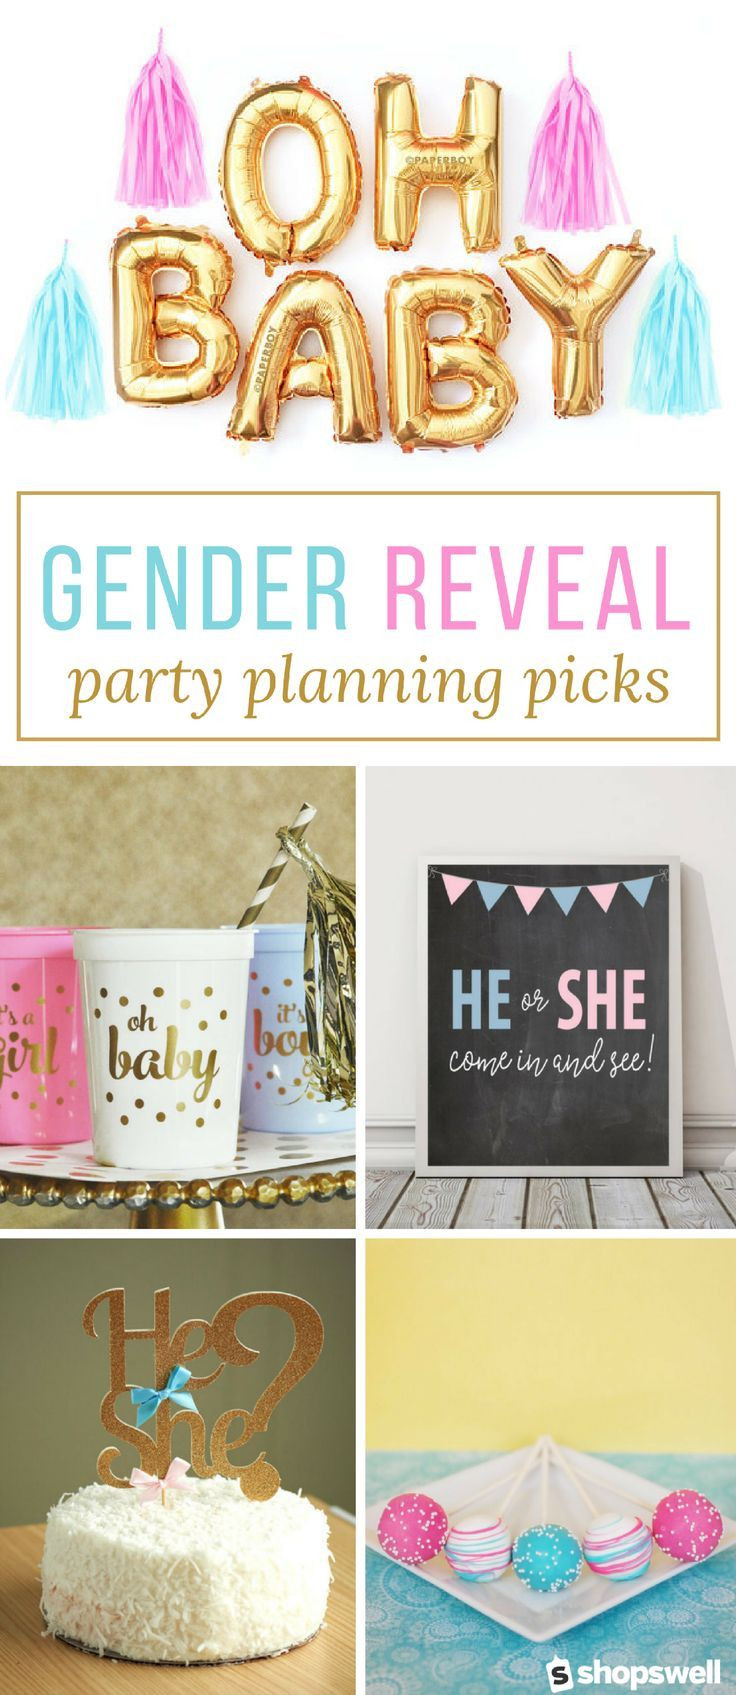 Baby Gender Reveal Party Ideas Pinterest
 188 best Gender reveal ideas images on Pinterest